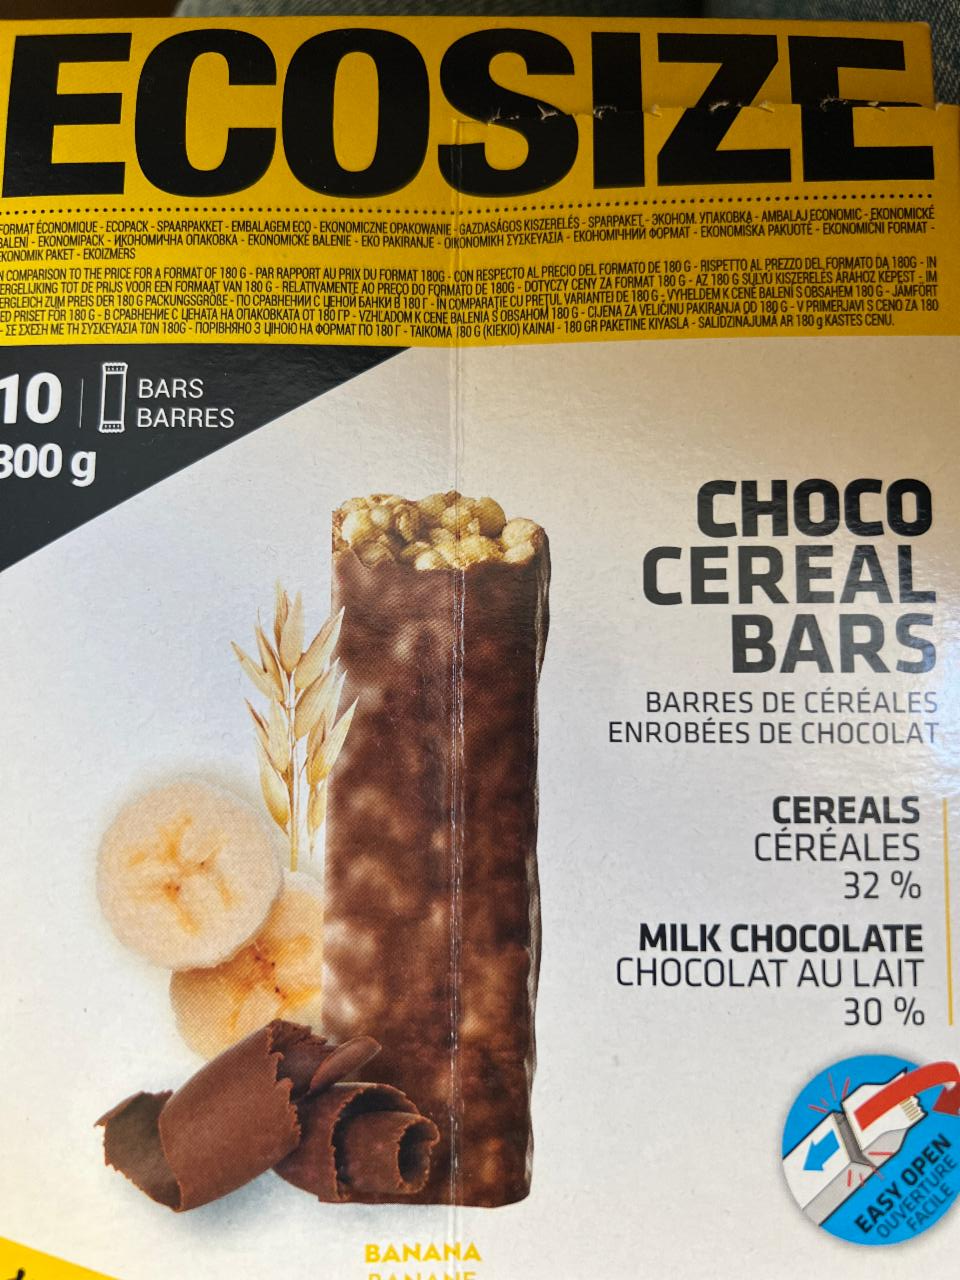 Фото - Злаковый батончик Choco cereal bars банан Ecosize